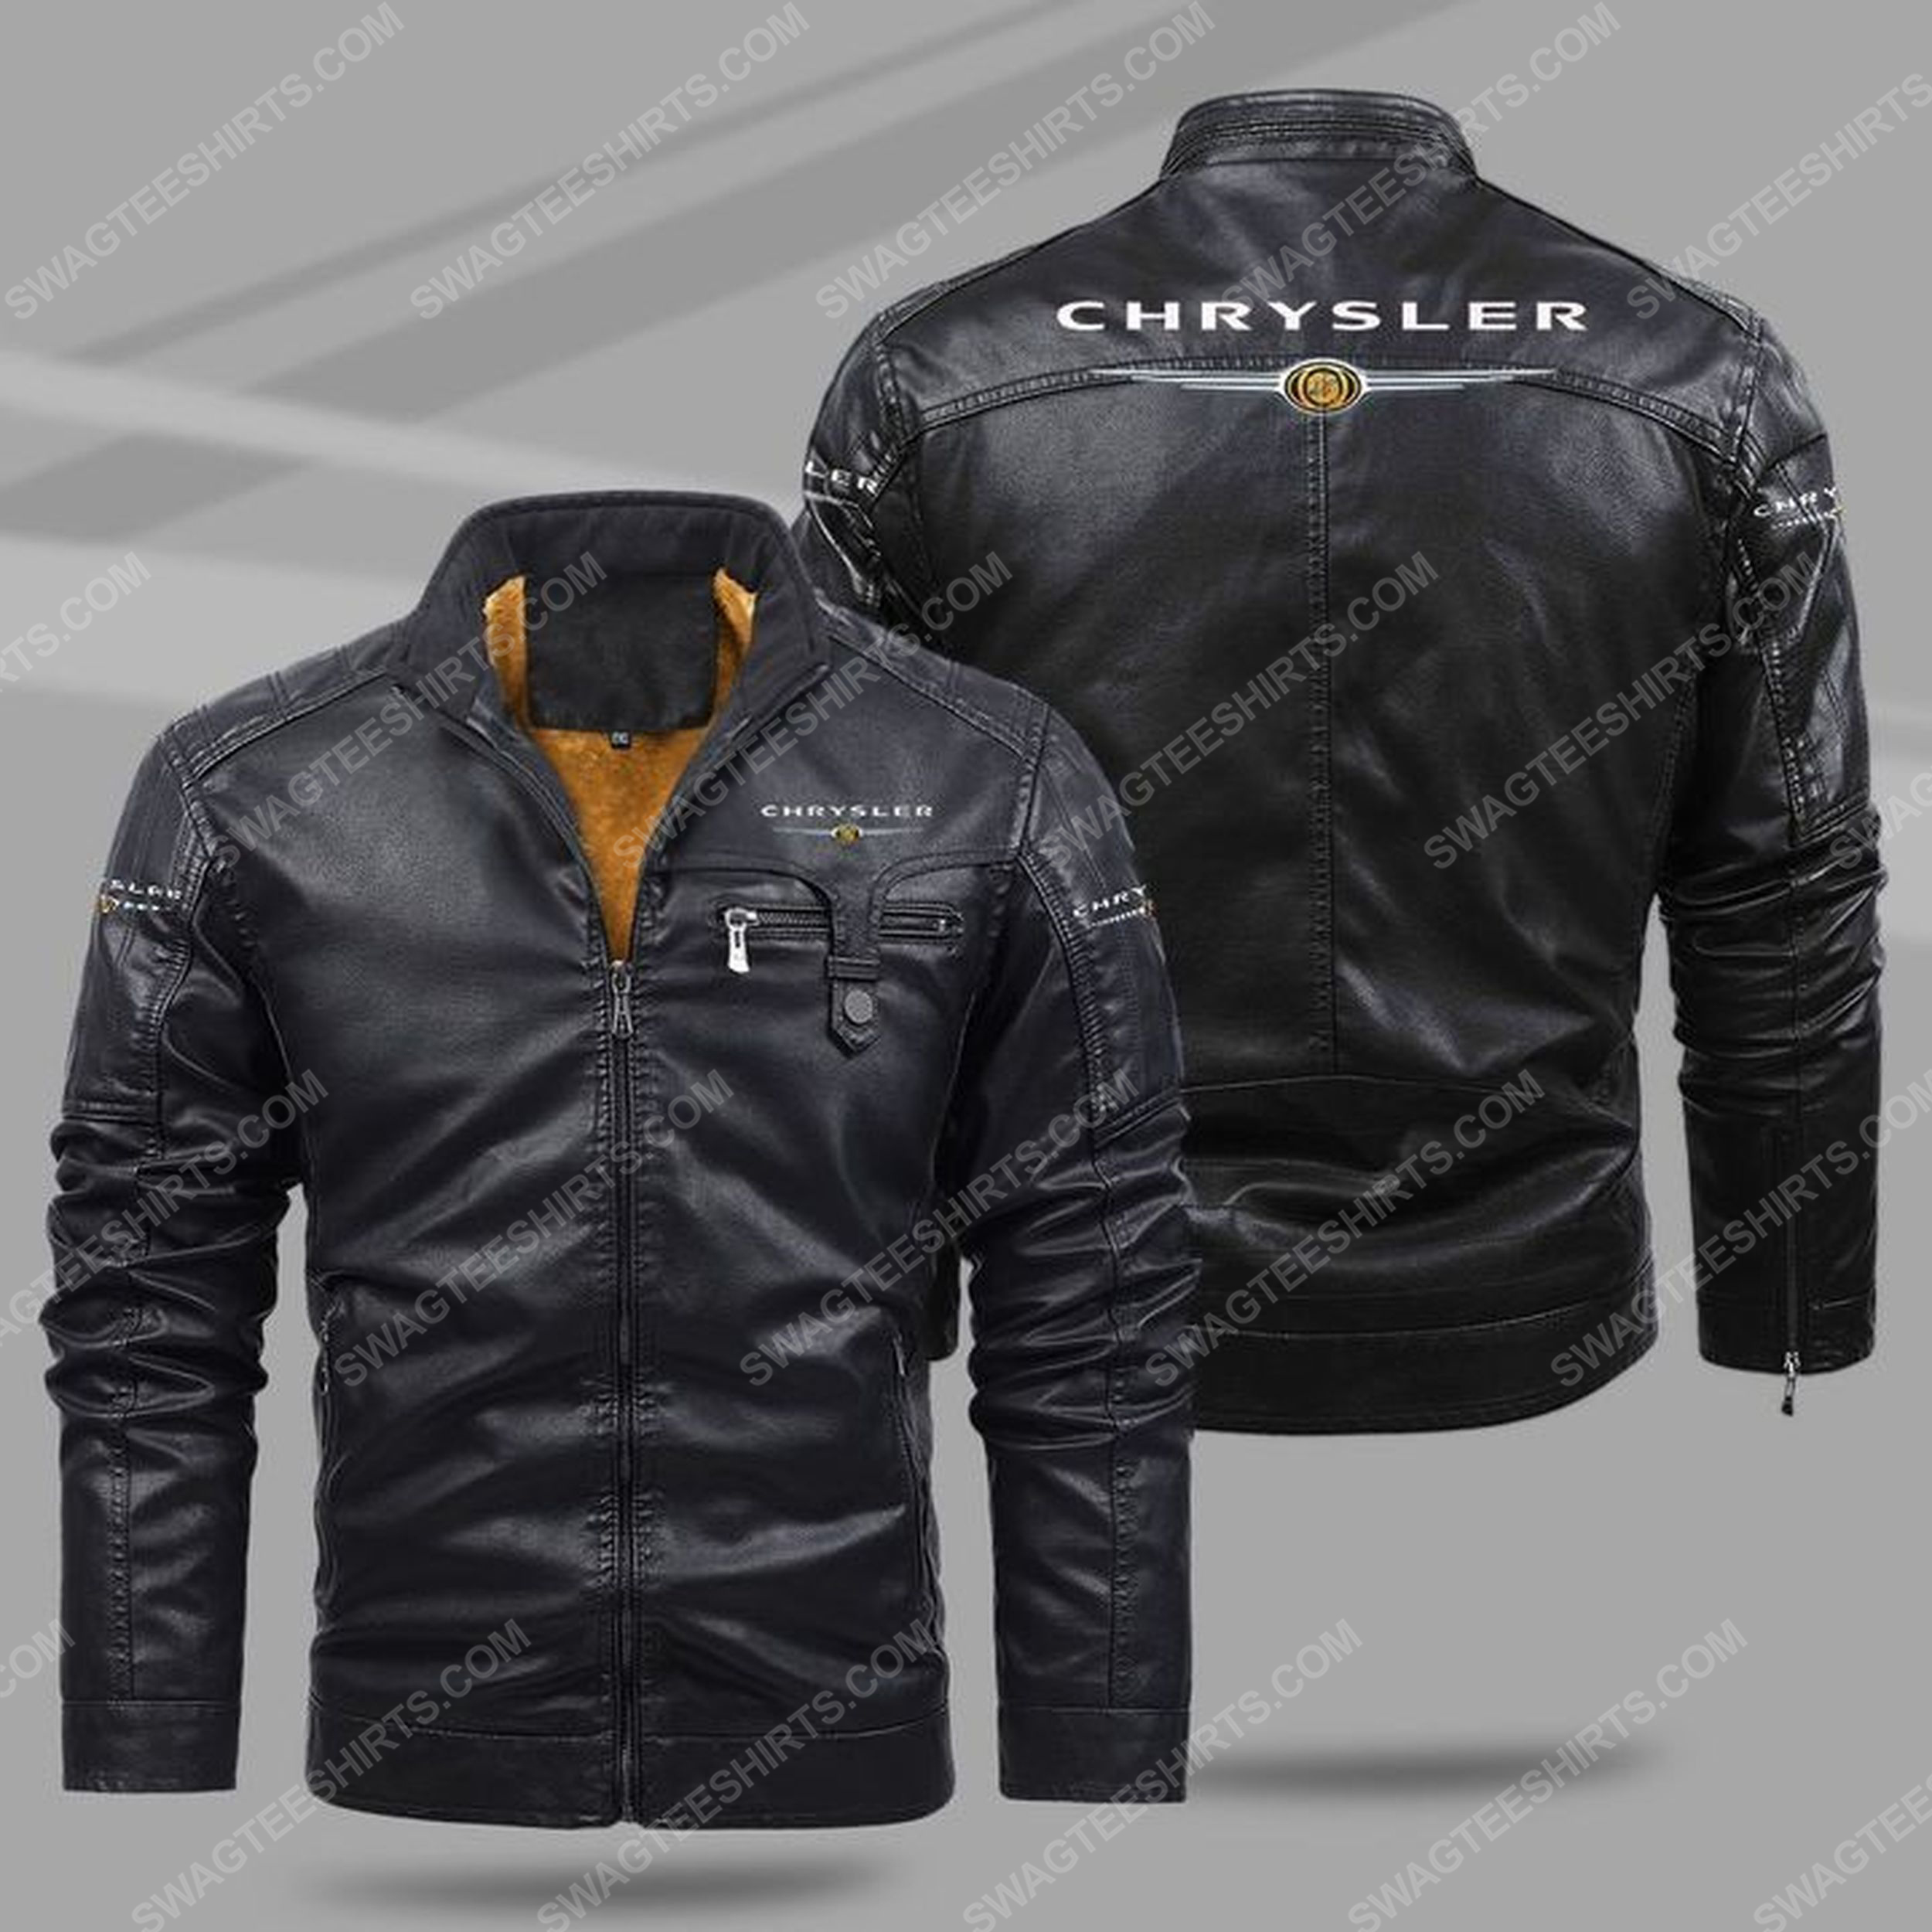 Chrysler car all over print fleece leather jacket - black 1 - Copy